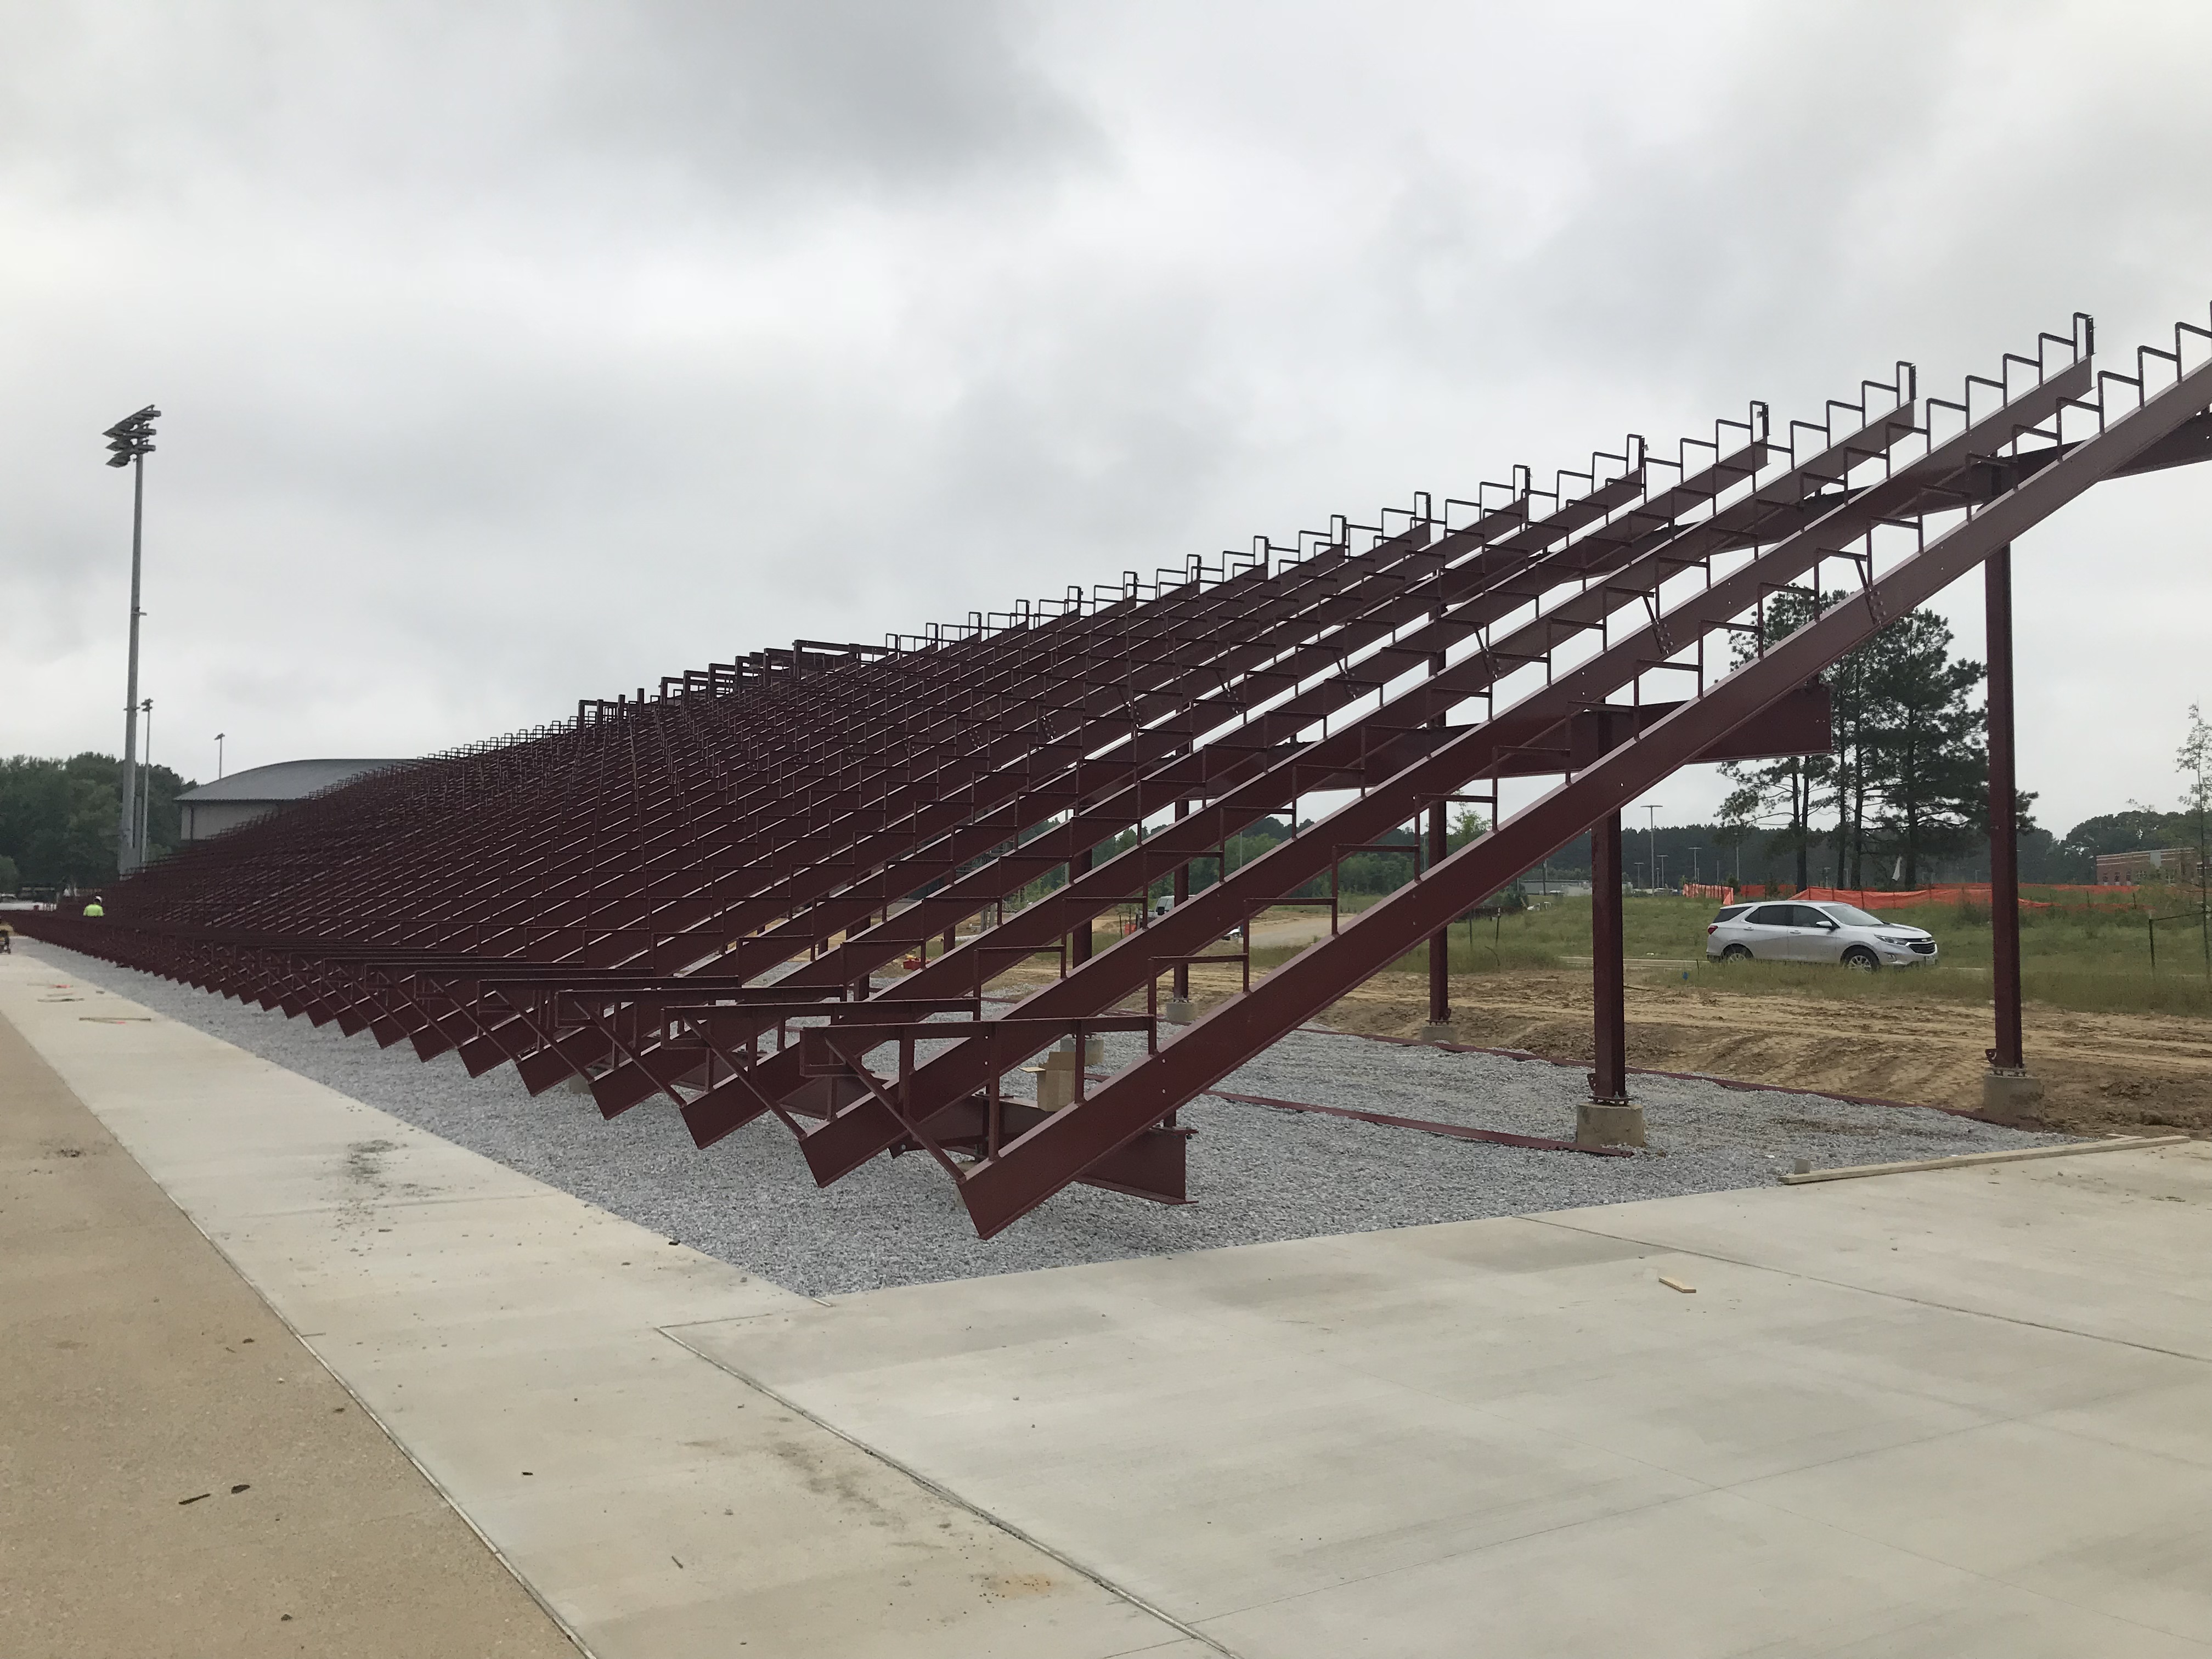 Collierville High School - Collierville, TN (Outside Memphis) - Project Update